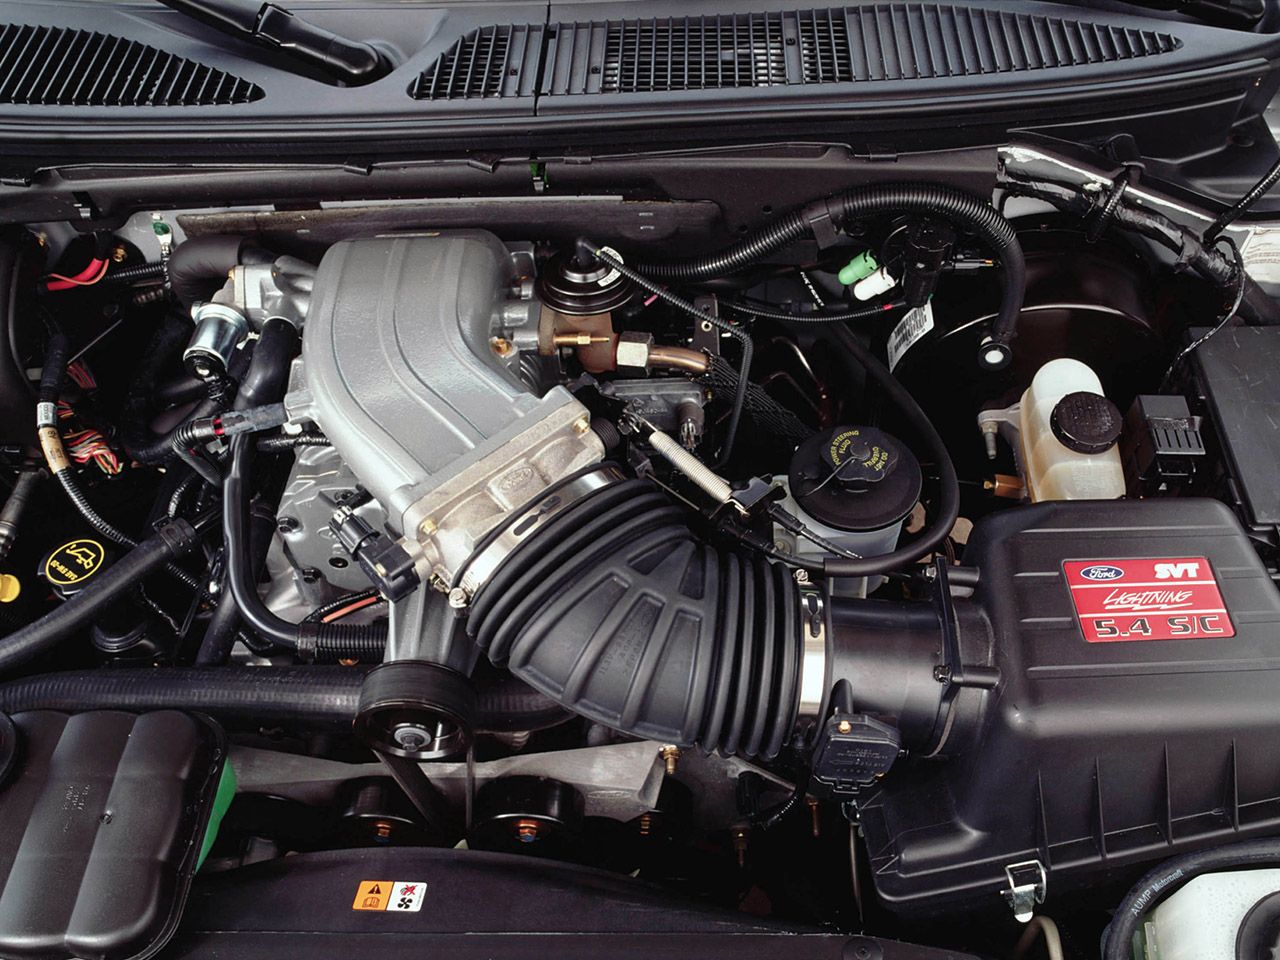 2004 Ford SVT F-150 Lightning - Engine - 1280x960 Wallpaper